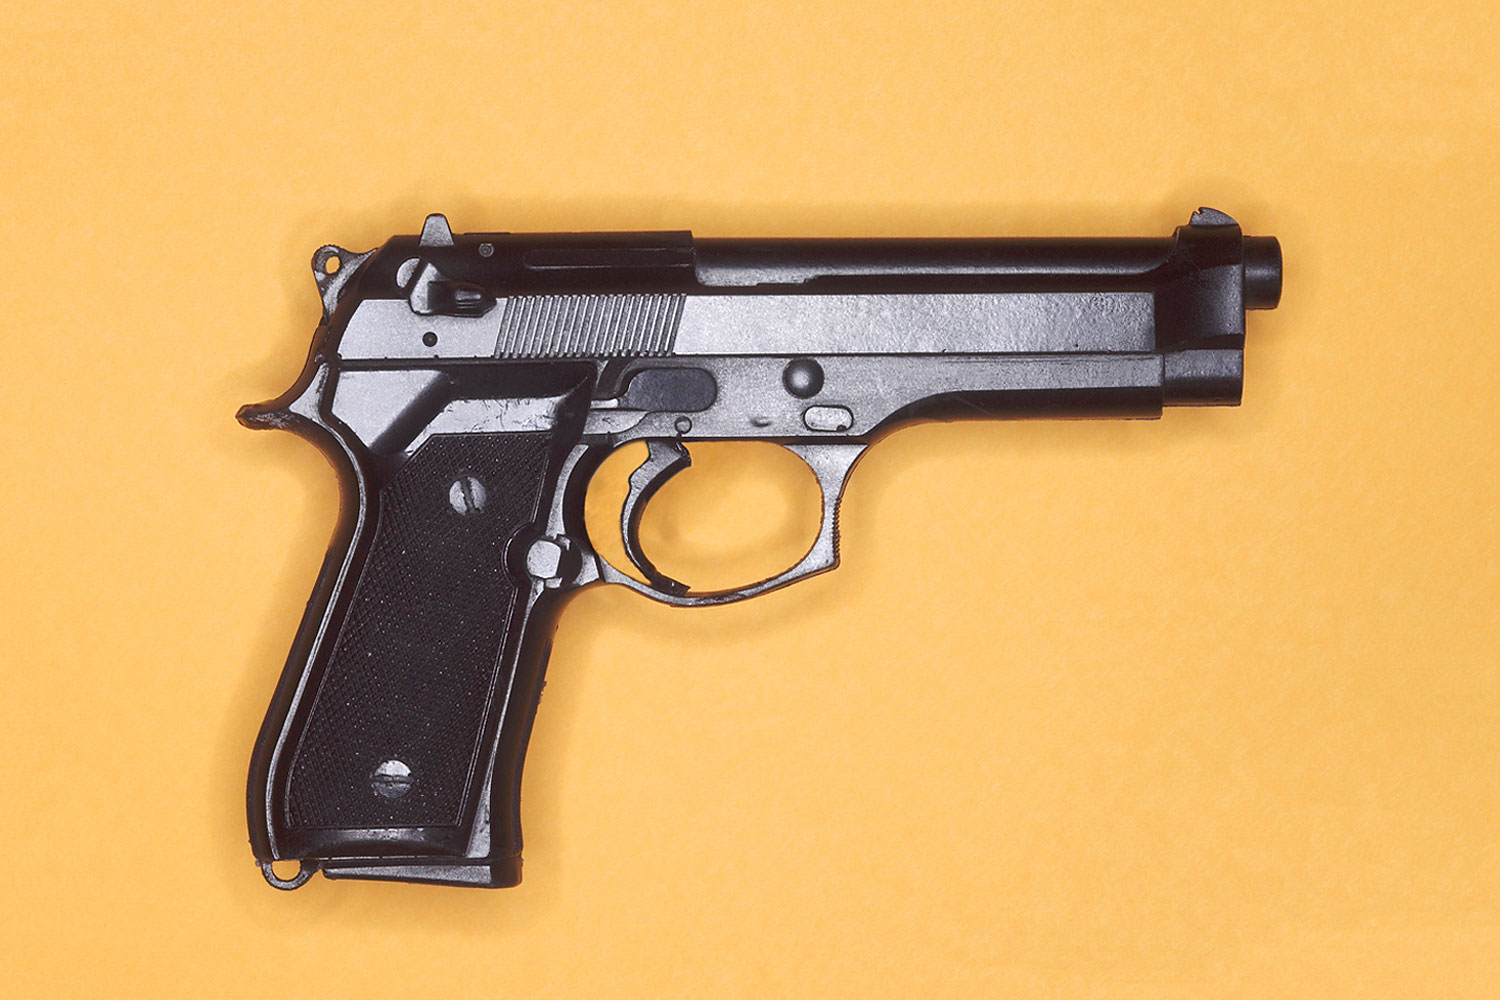 A stock image of a handgun